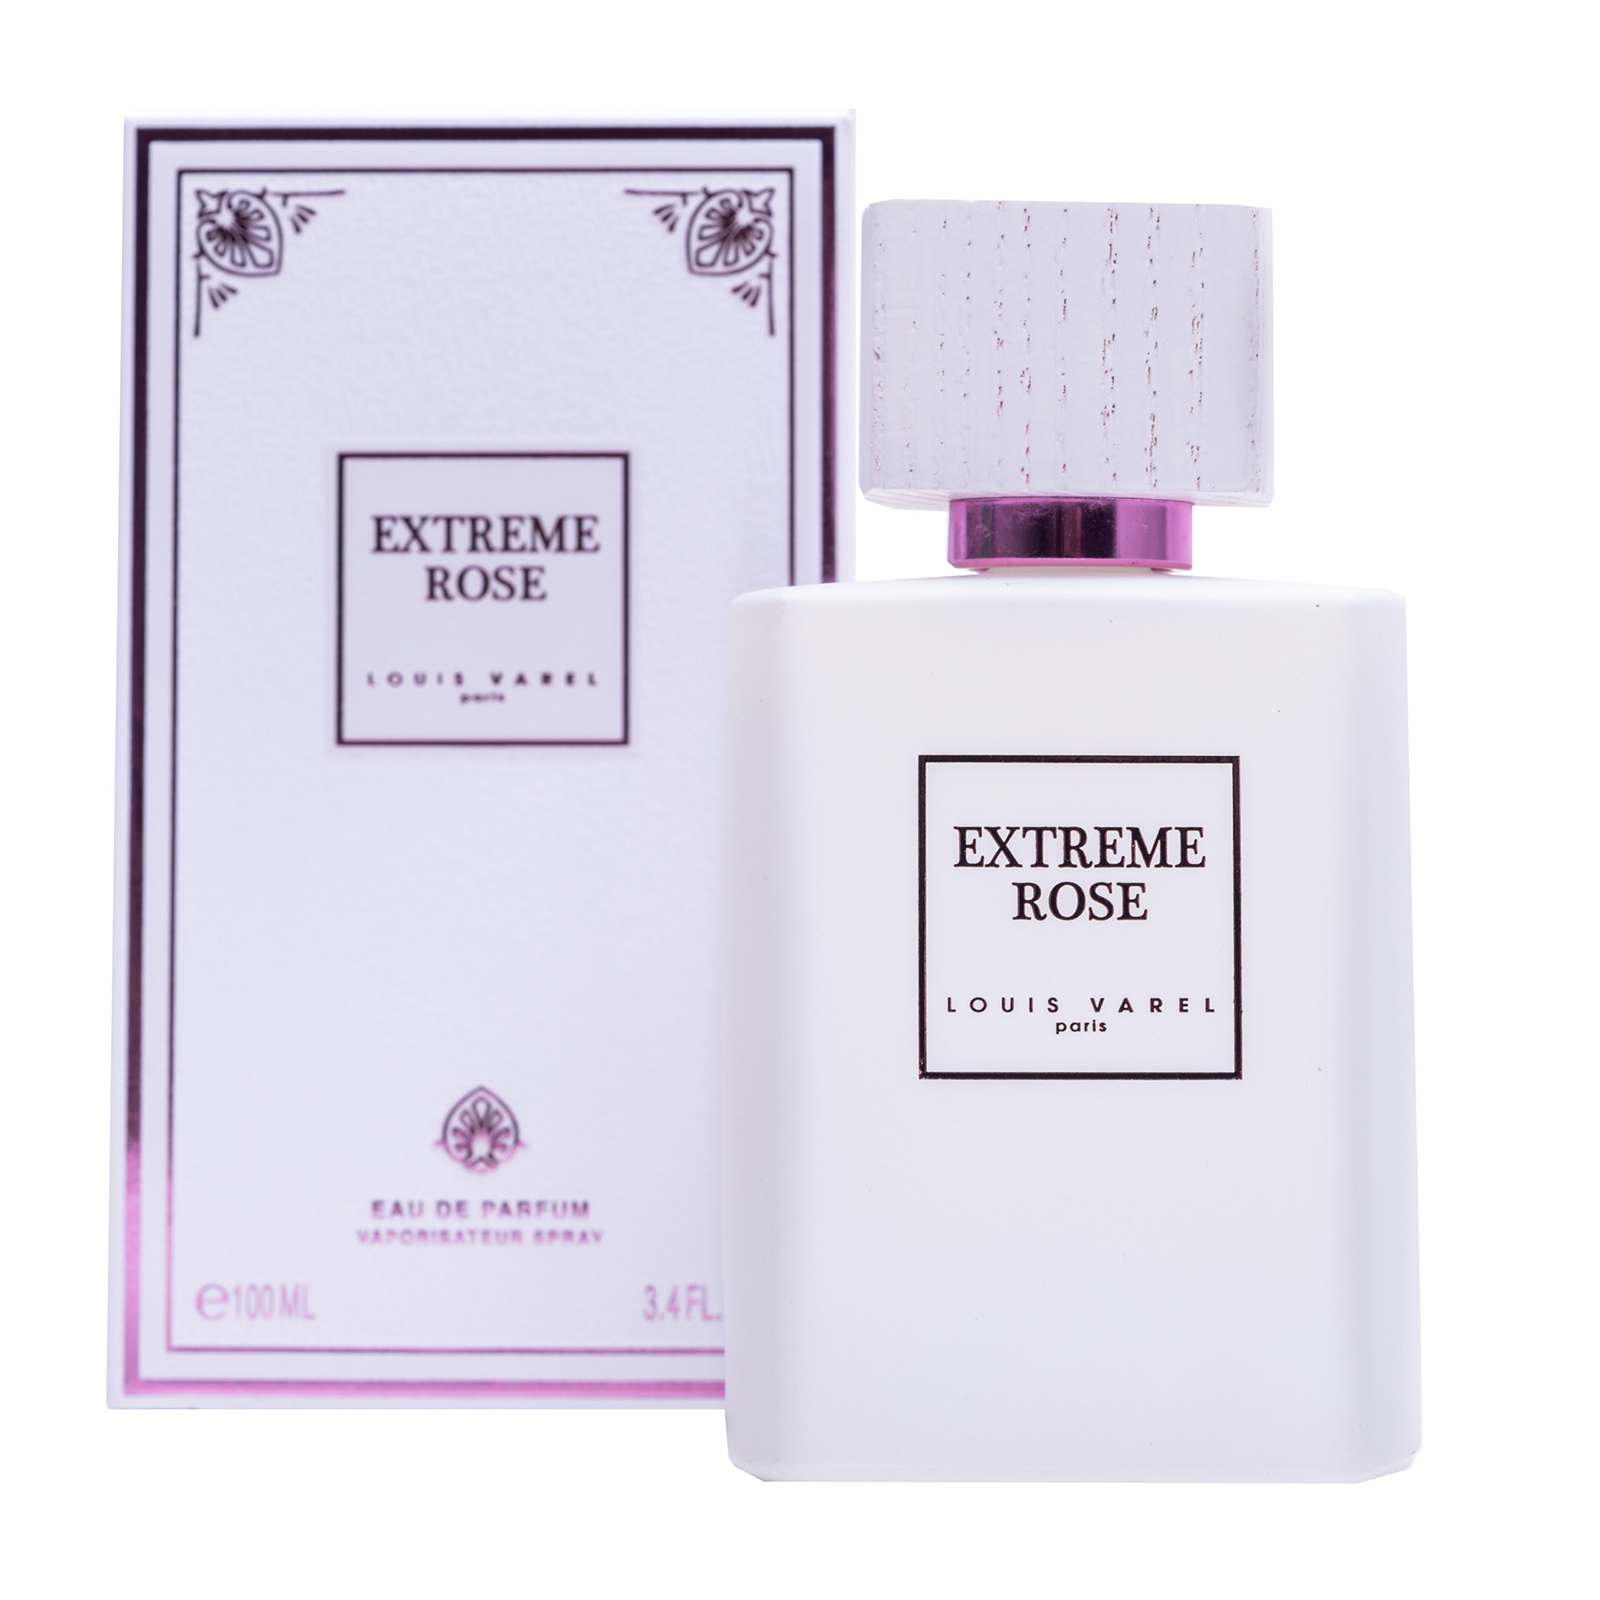 Extreme Rose by Louis Varel 100ml EDP Spray - Free Express Shipping